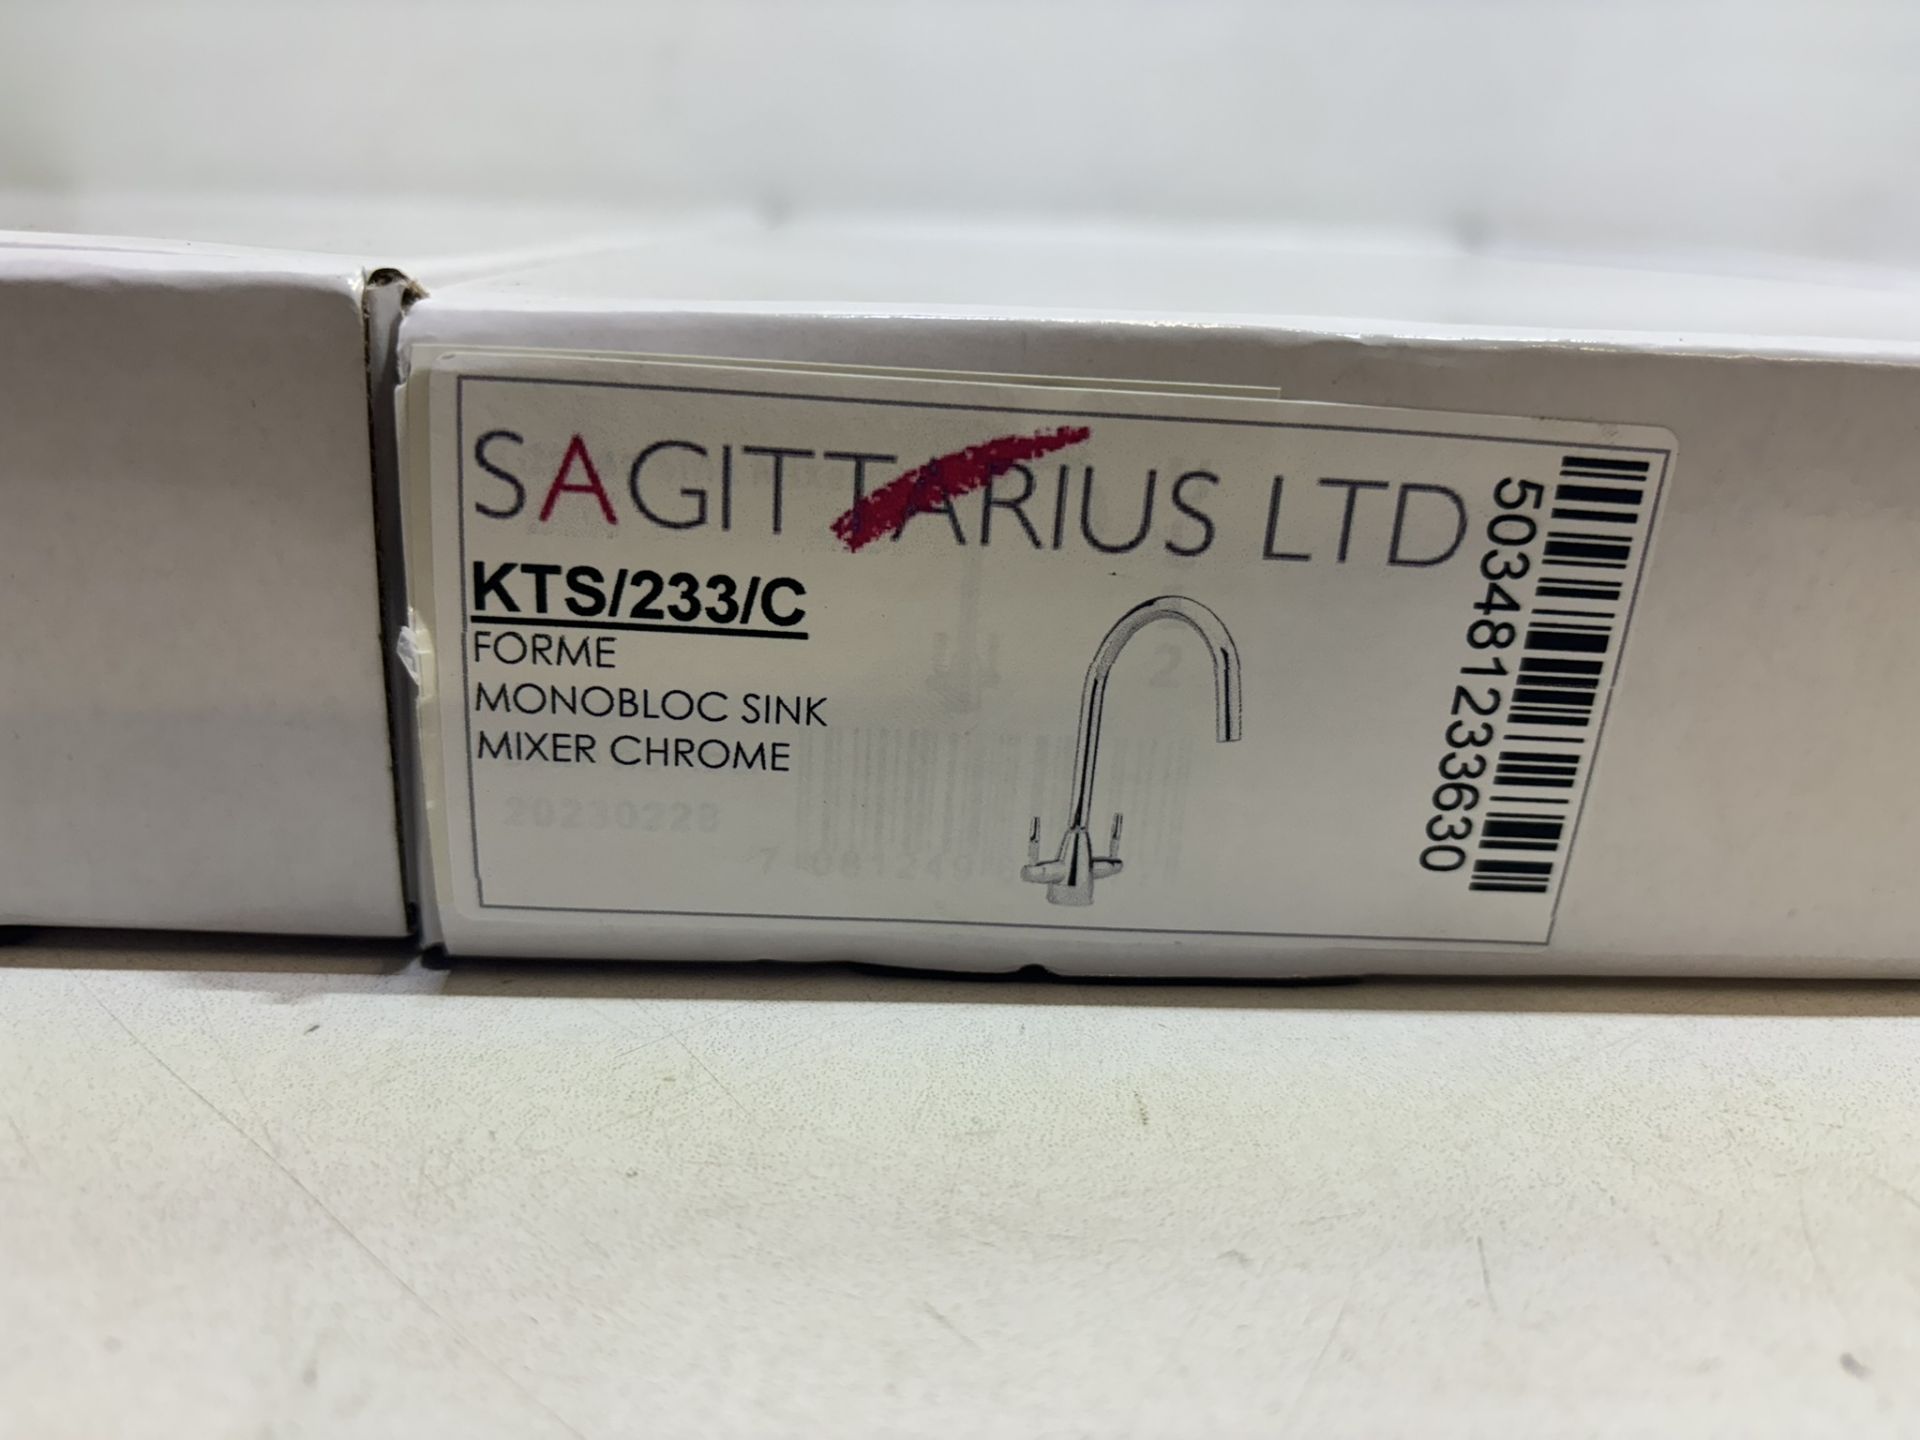 Sagittarius Ltd KTS/233/C Forme Monobloc Sink Mixer Chrome - Bild 2 aus 2